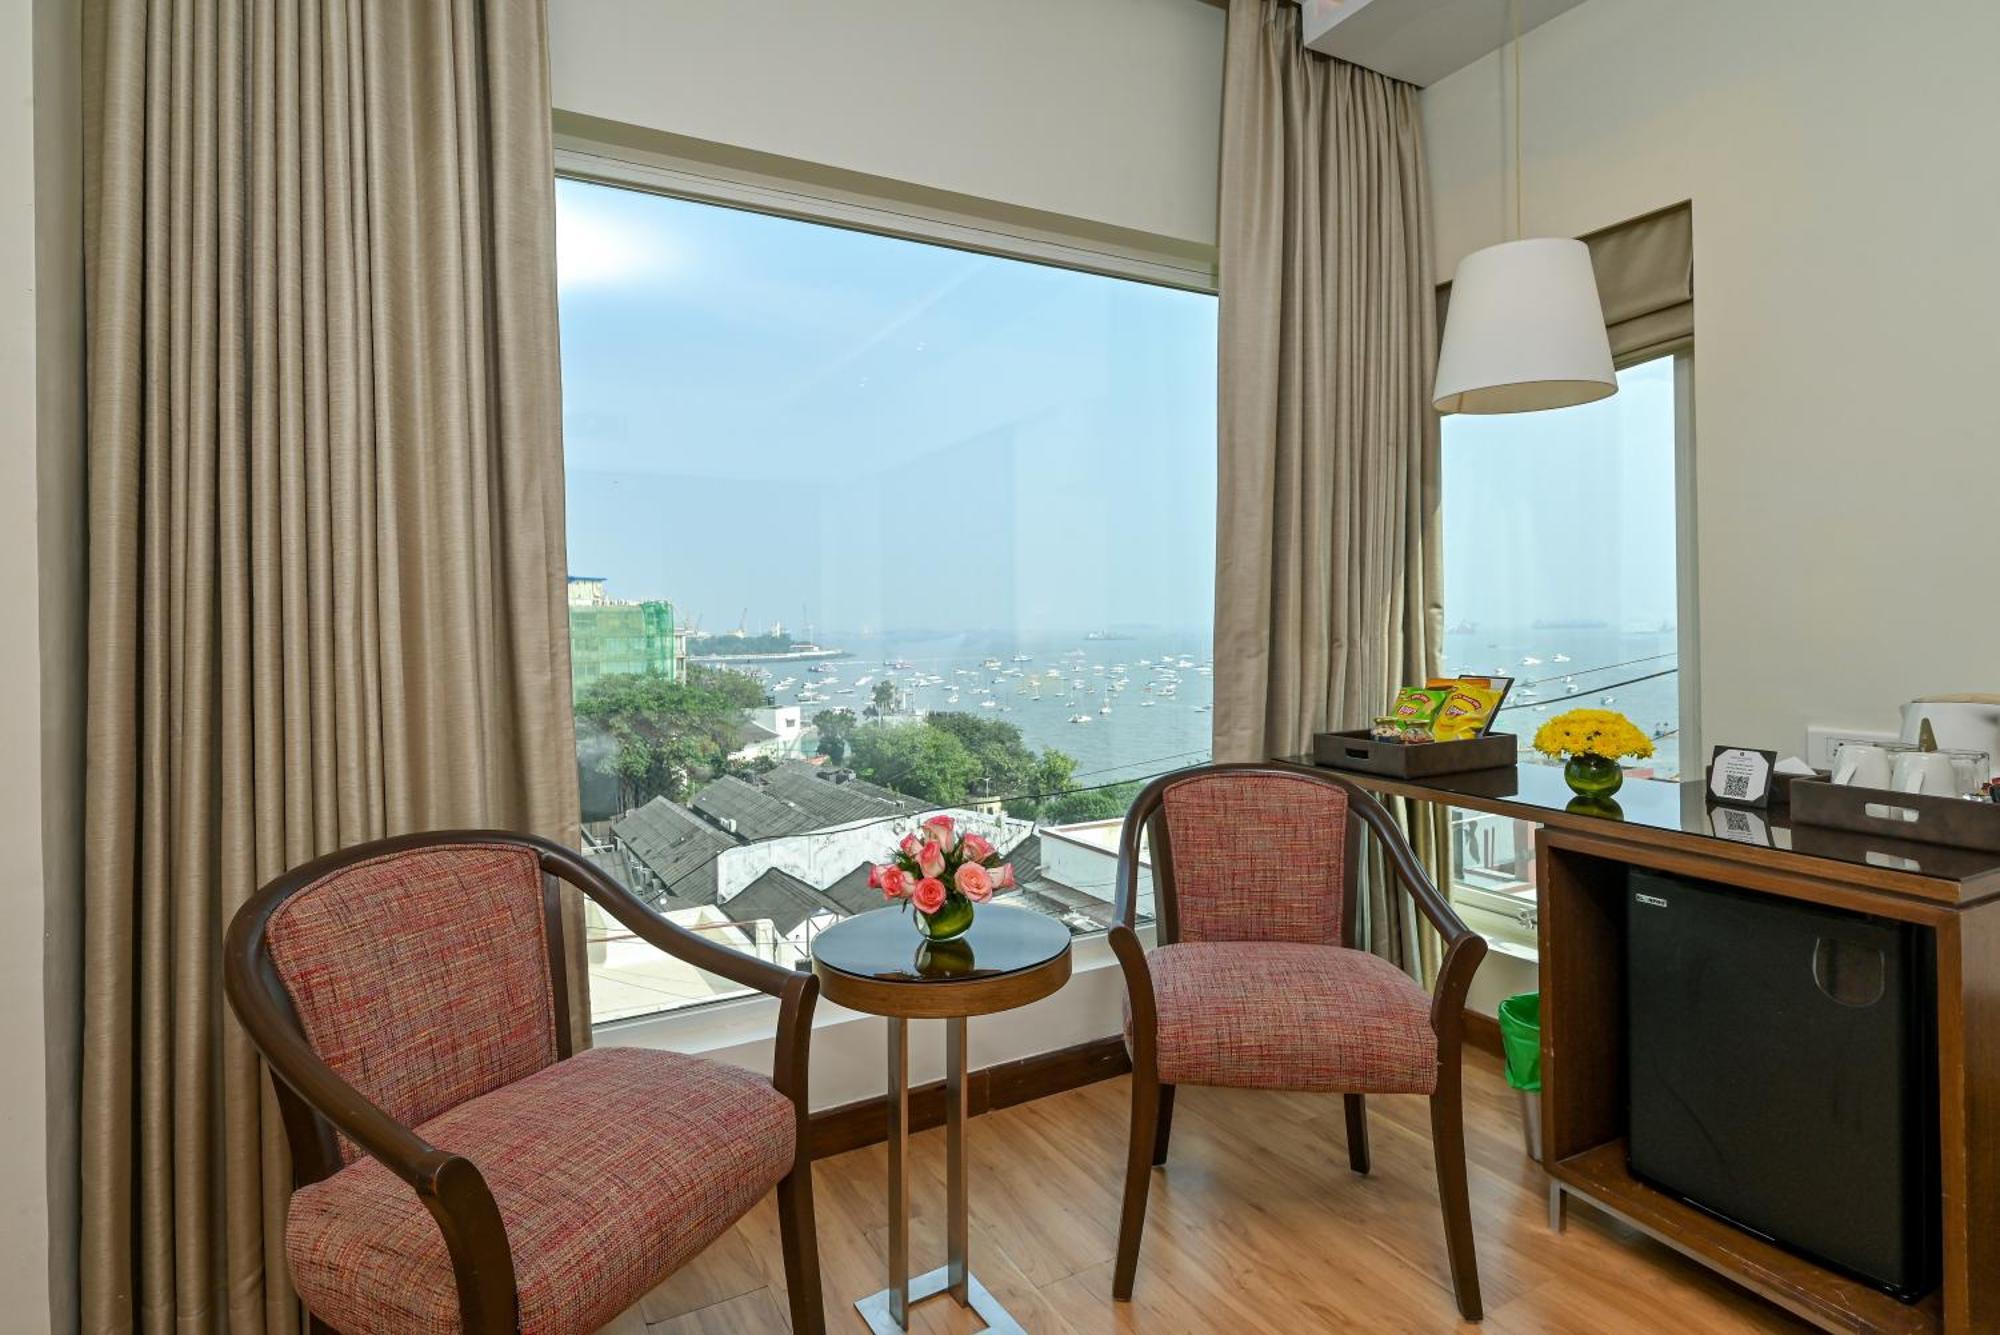 Fariyas Hotel Mumbai , Colaba Exterior photo